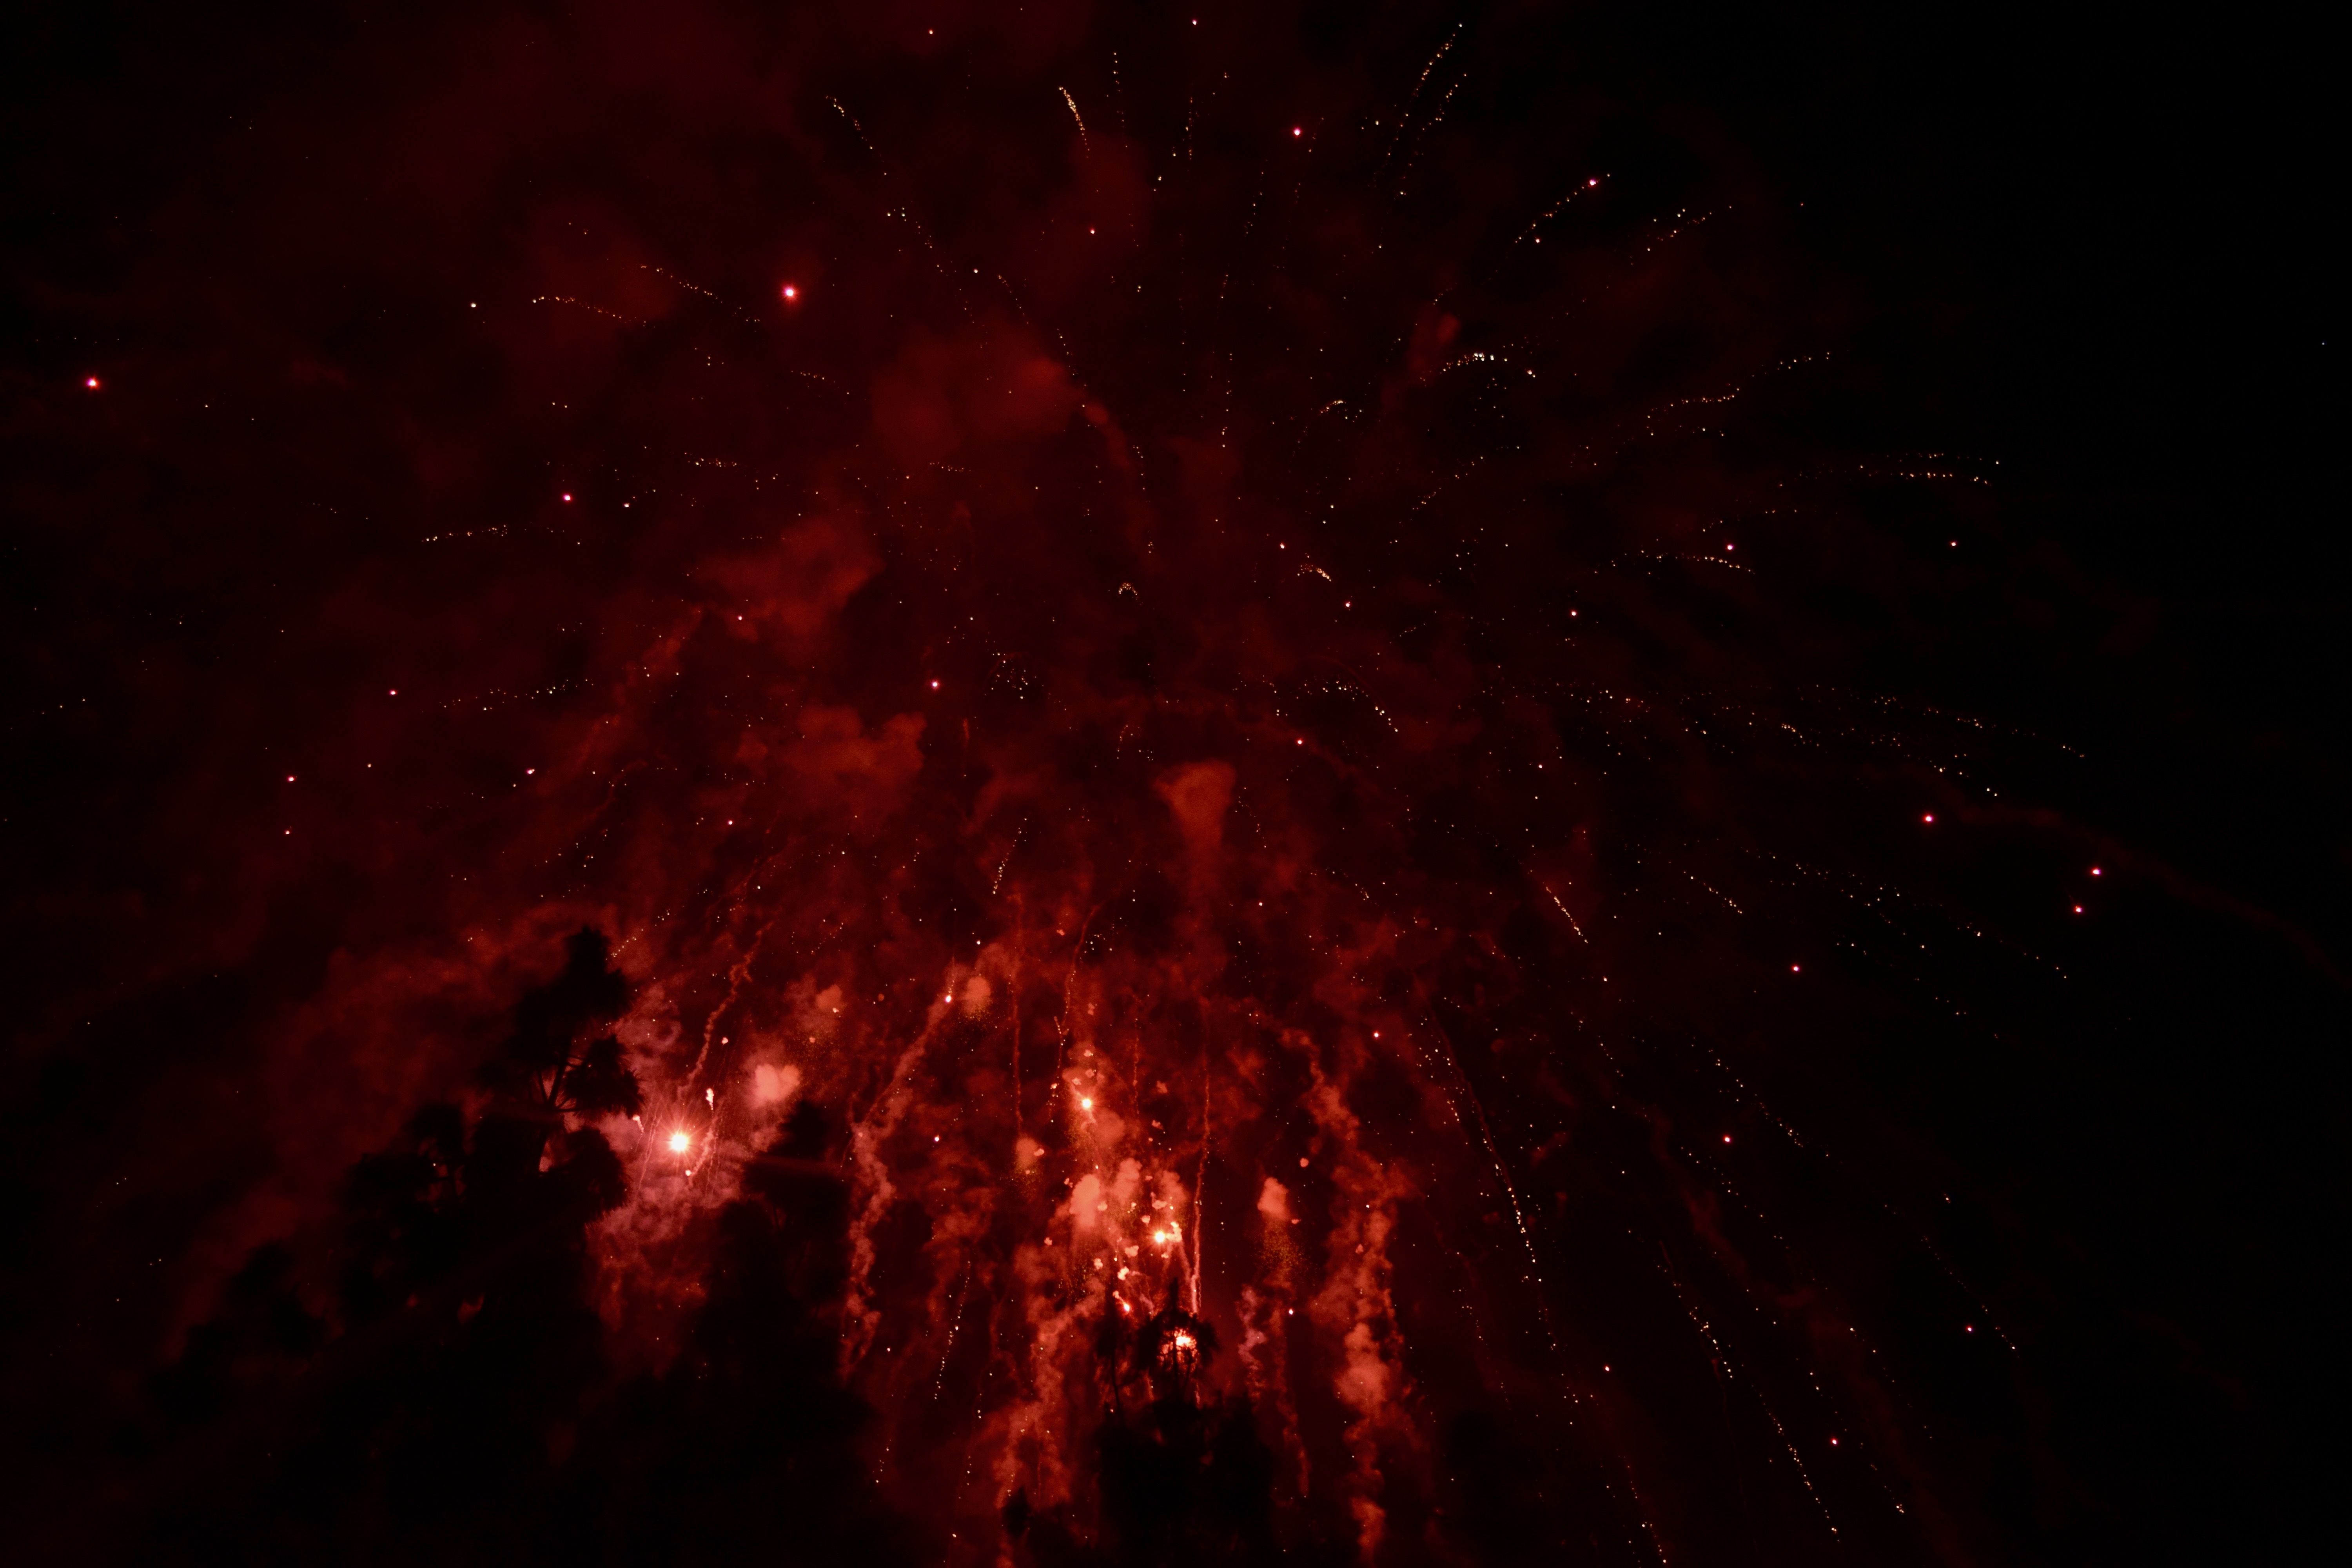 A fireworks show in the dark sky - Dark red